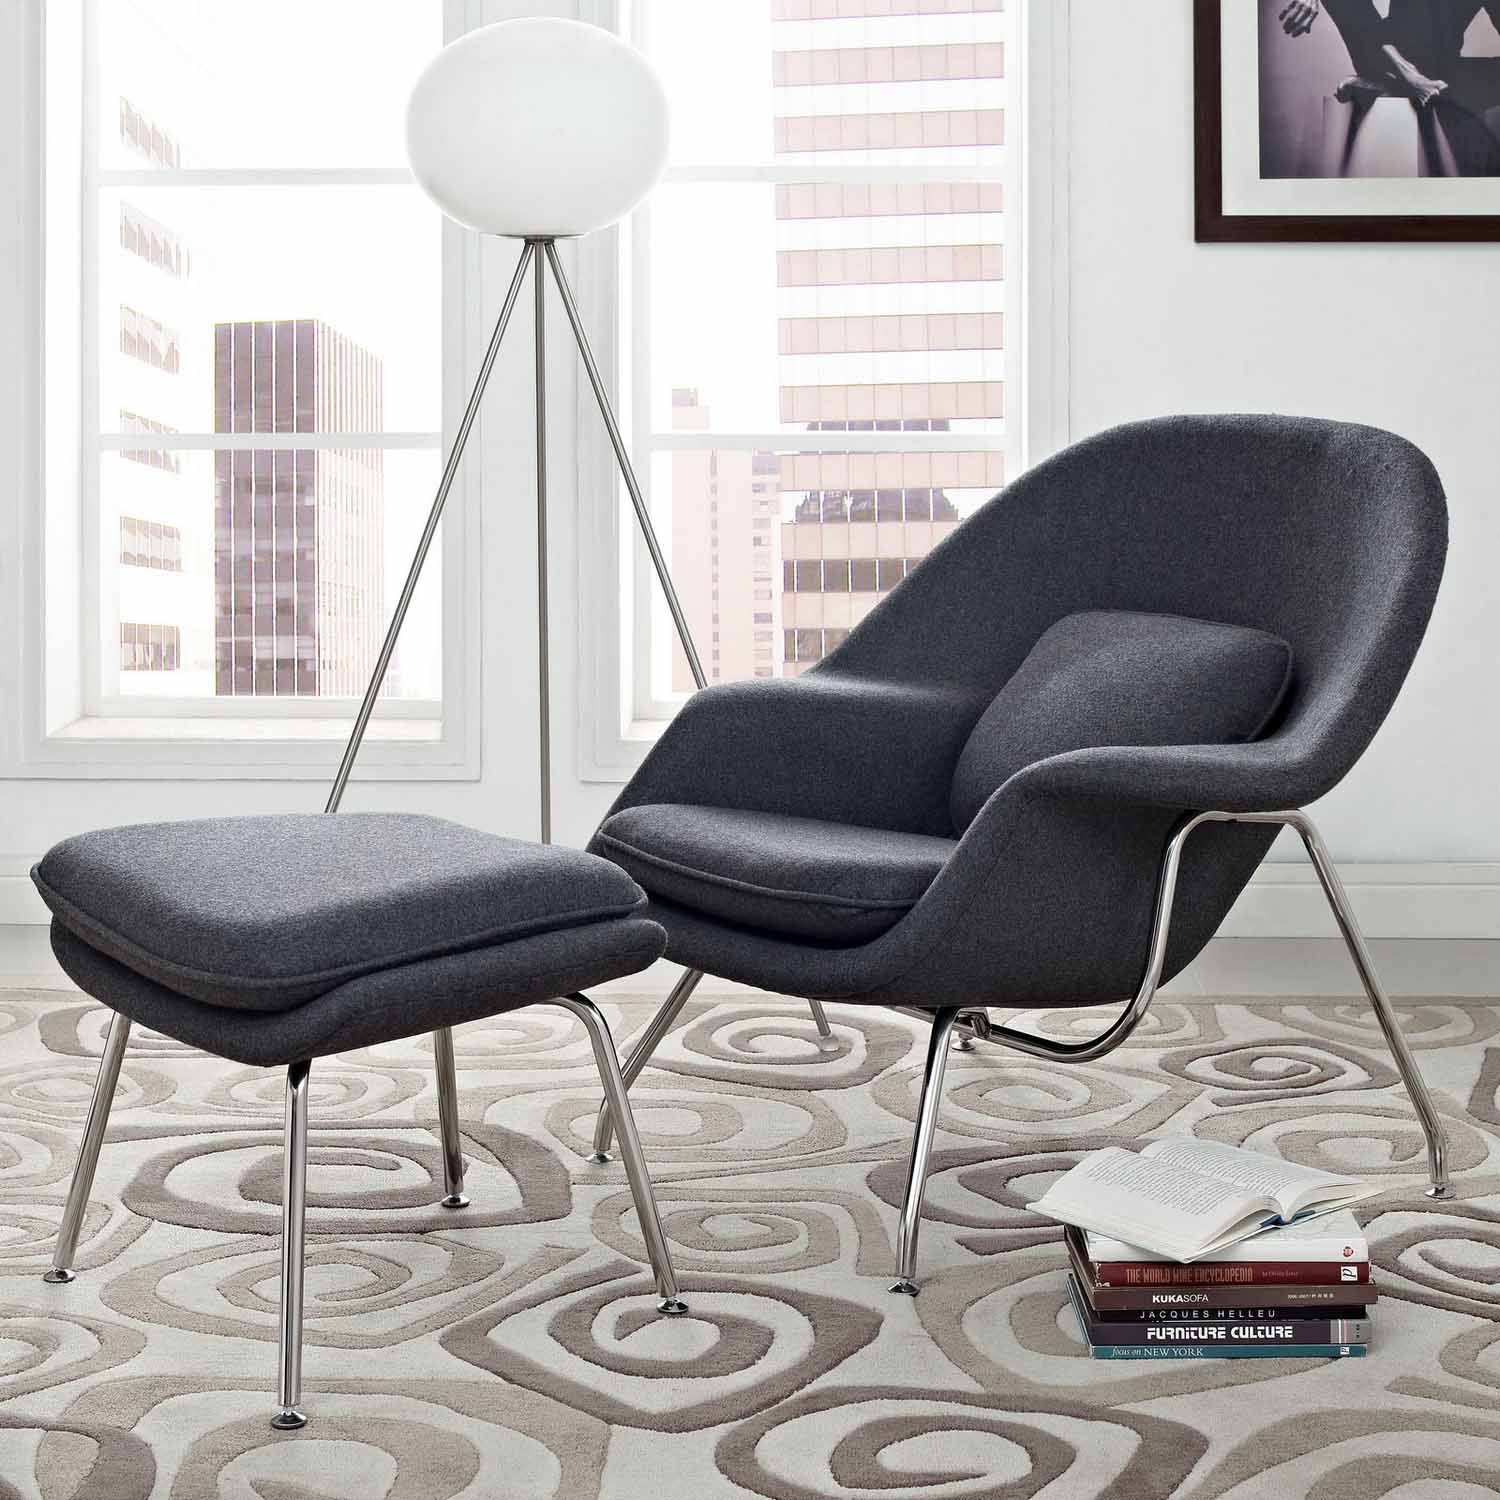 Modway W Fabric Lounge Chair - Dark Gray